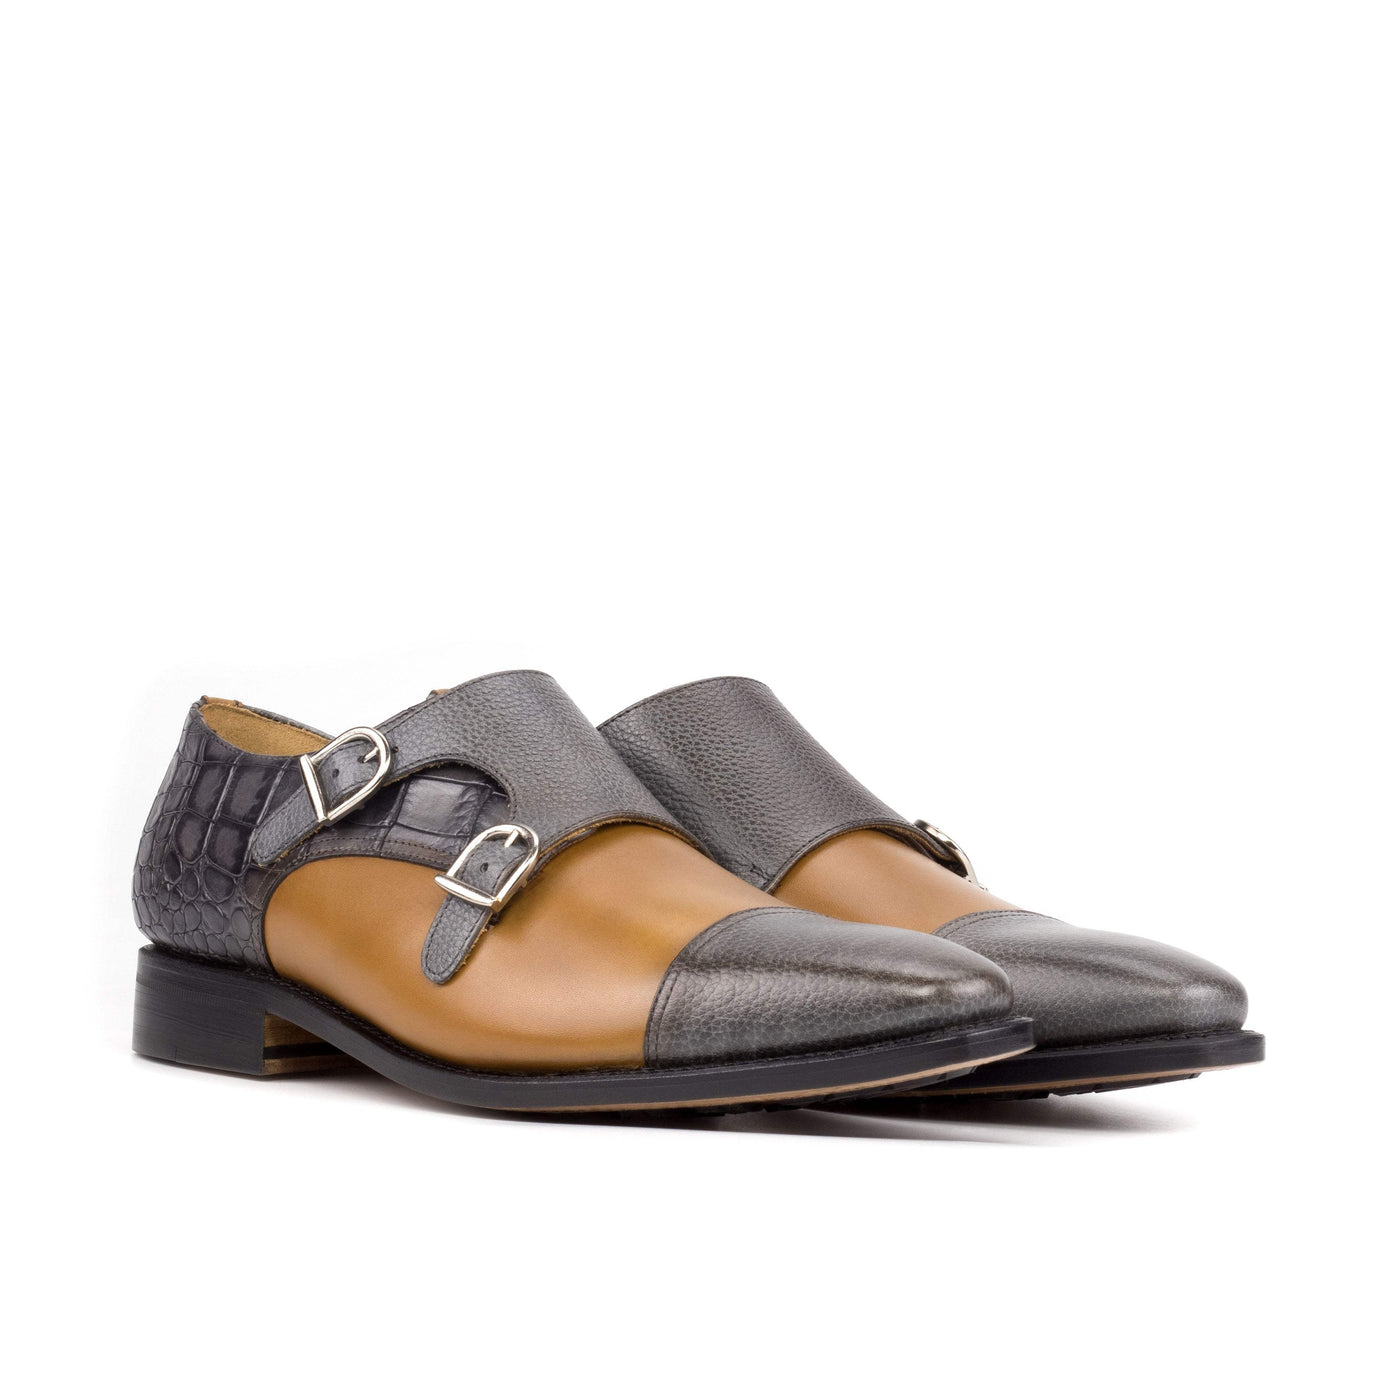 Men's Double Monk Shoes Leather Goodyear Welt Brown Grey 5722 3- MERRIMIUM